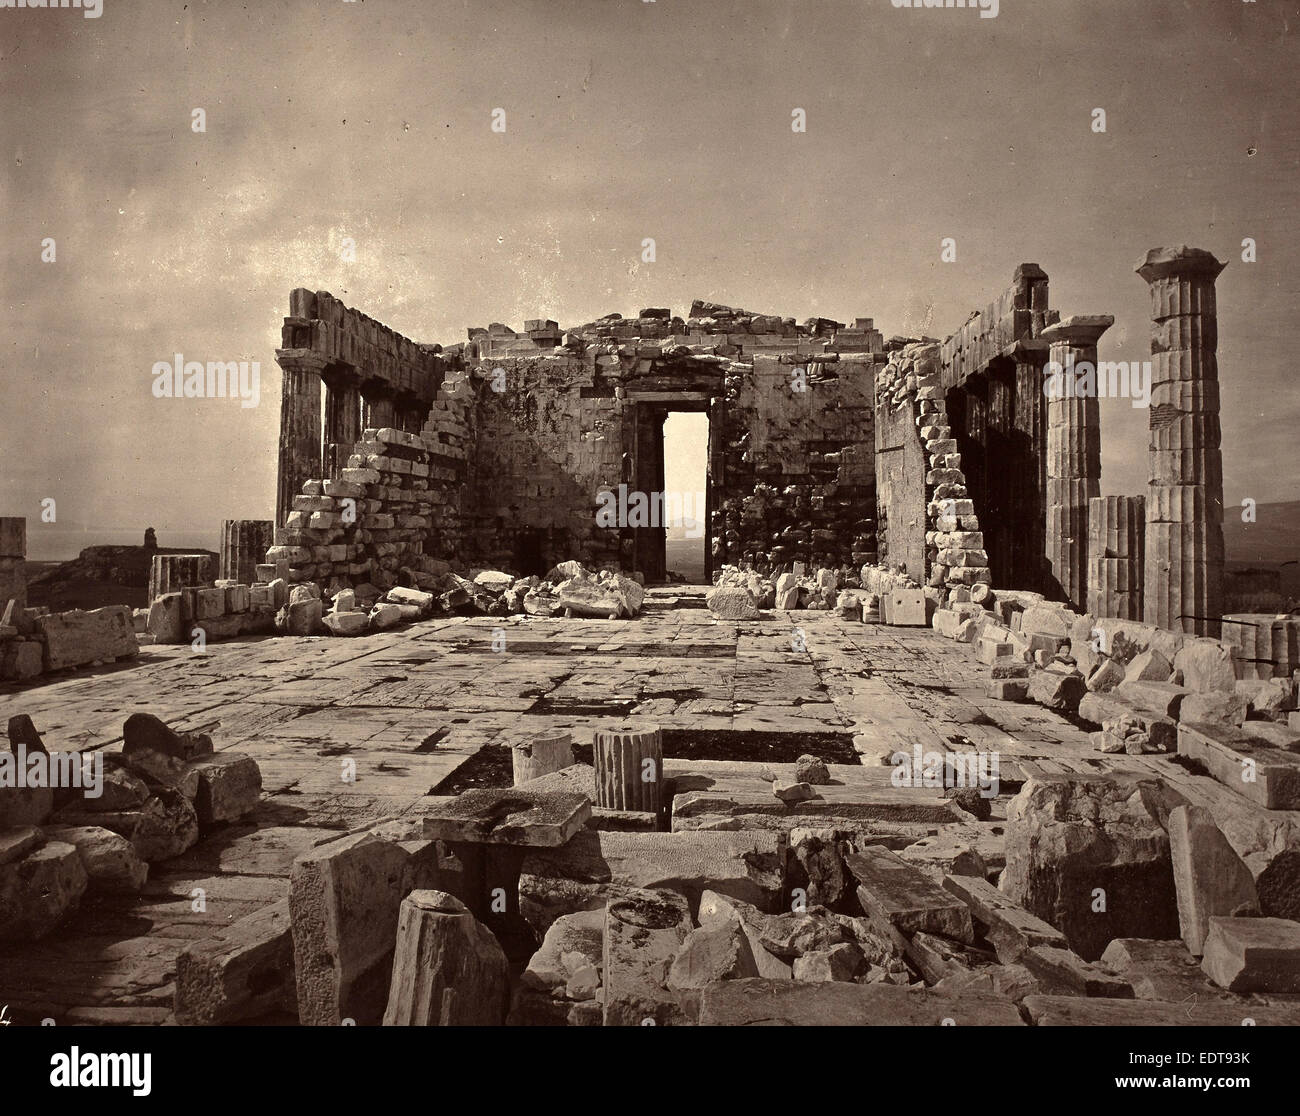 William James Stillman (American, 1828 - 1901), The Acropolis of Athens, plate 14, 1869-1870, carbon print Stock Photo